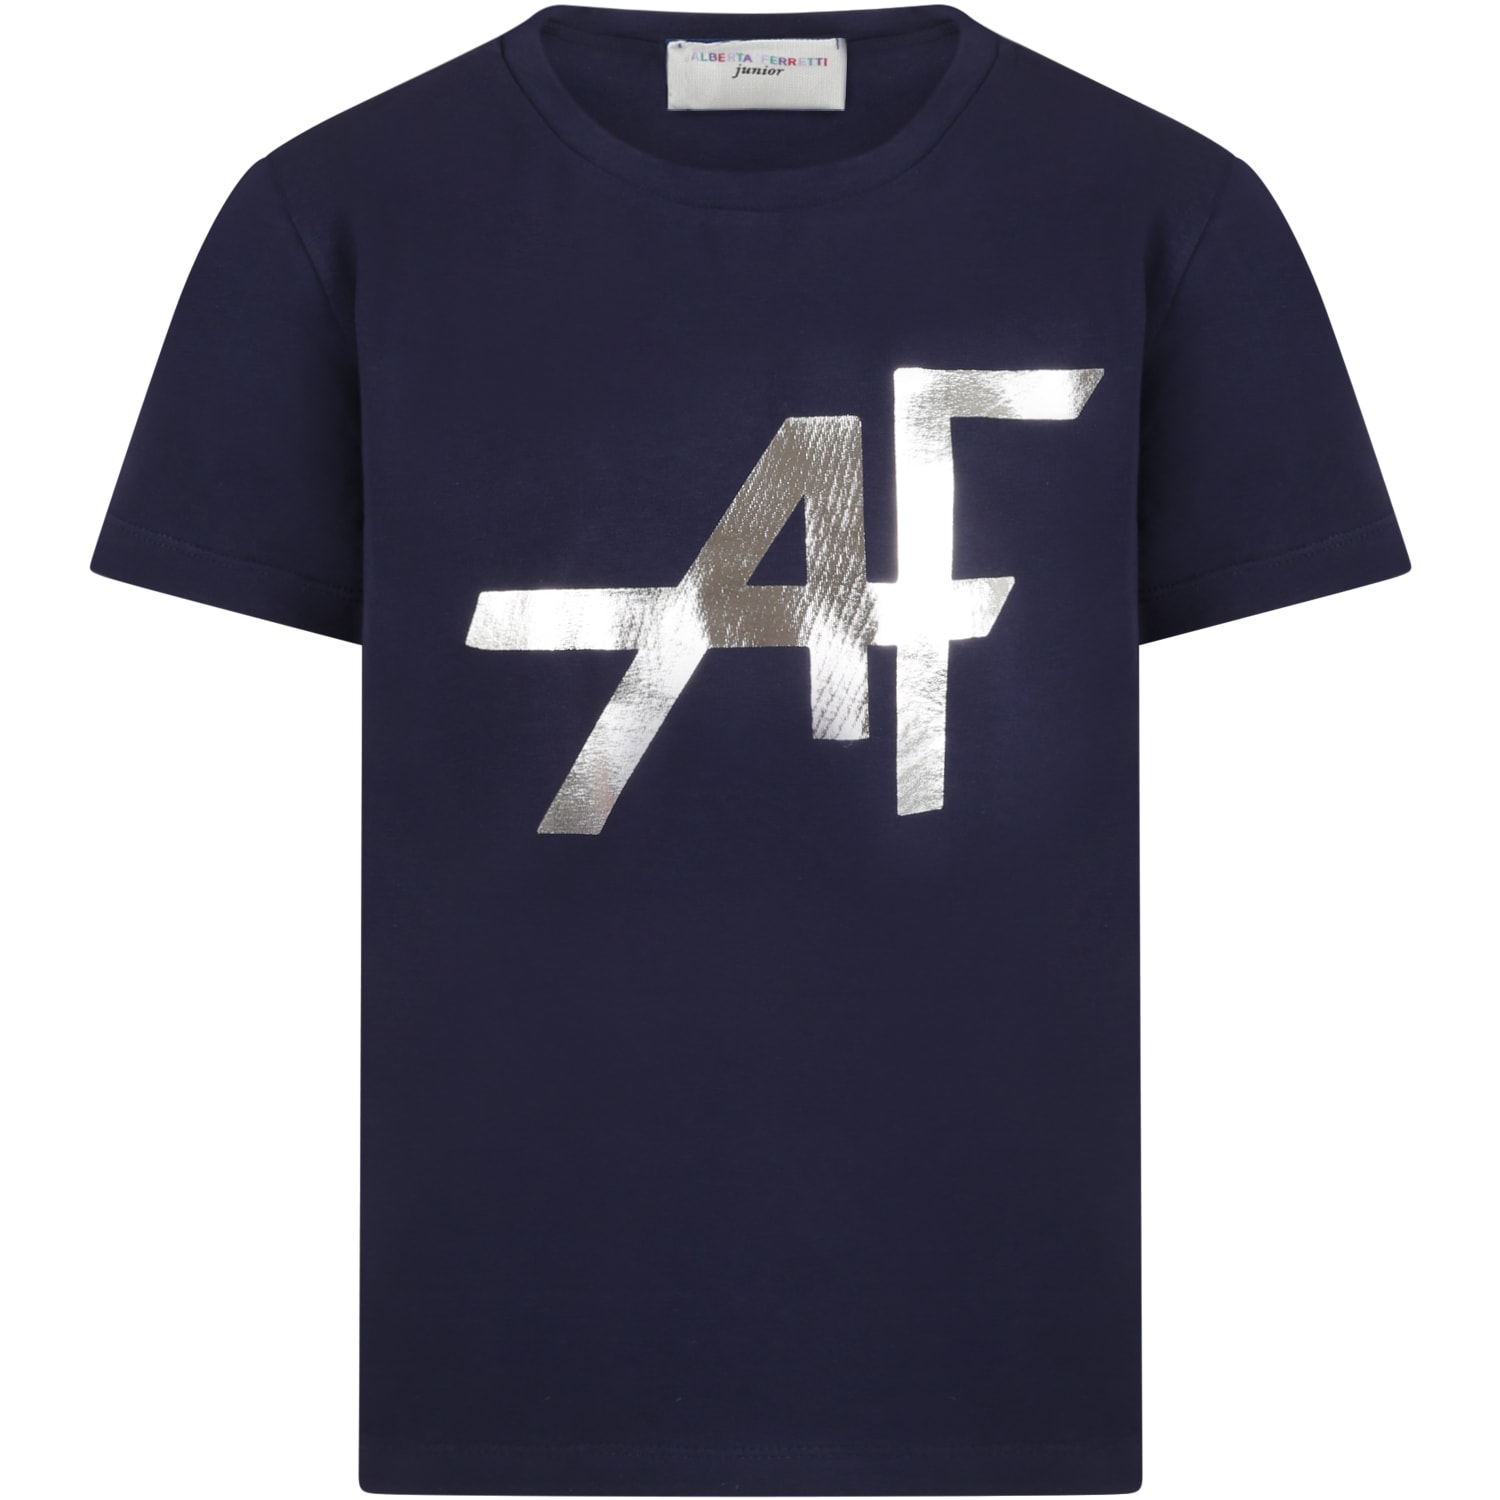 Alberta Ferretti Kids' Blue T-shirt For Girl With Silver Logo